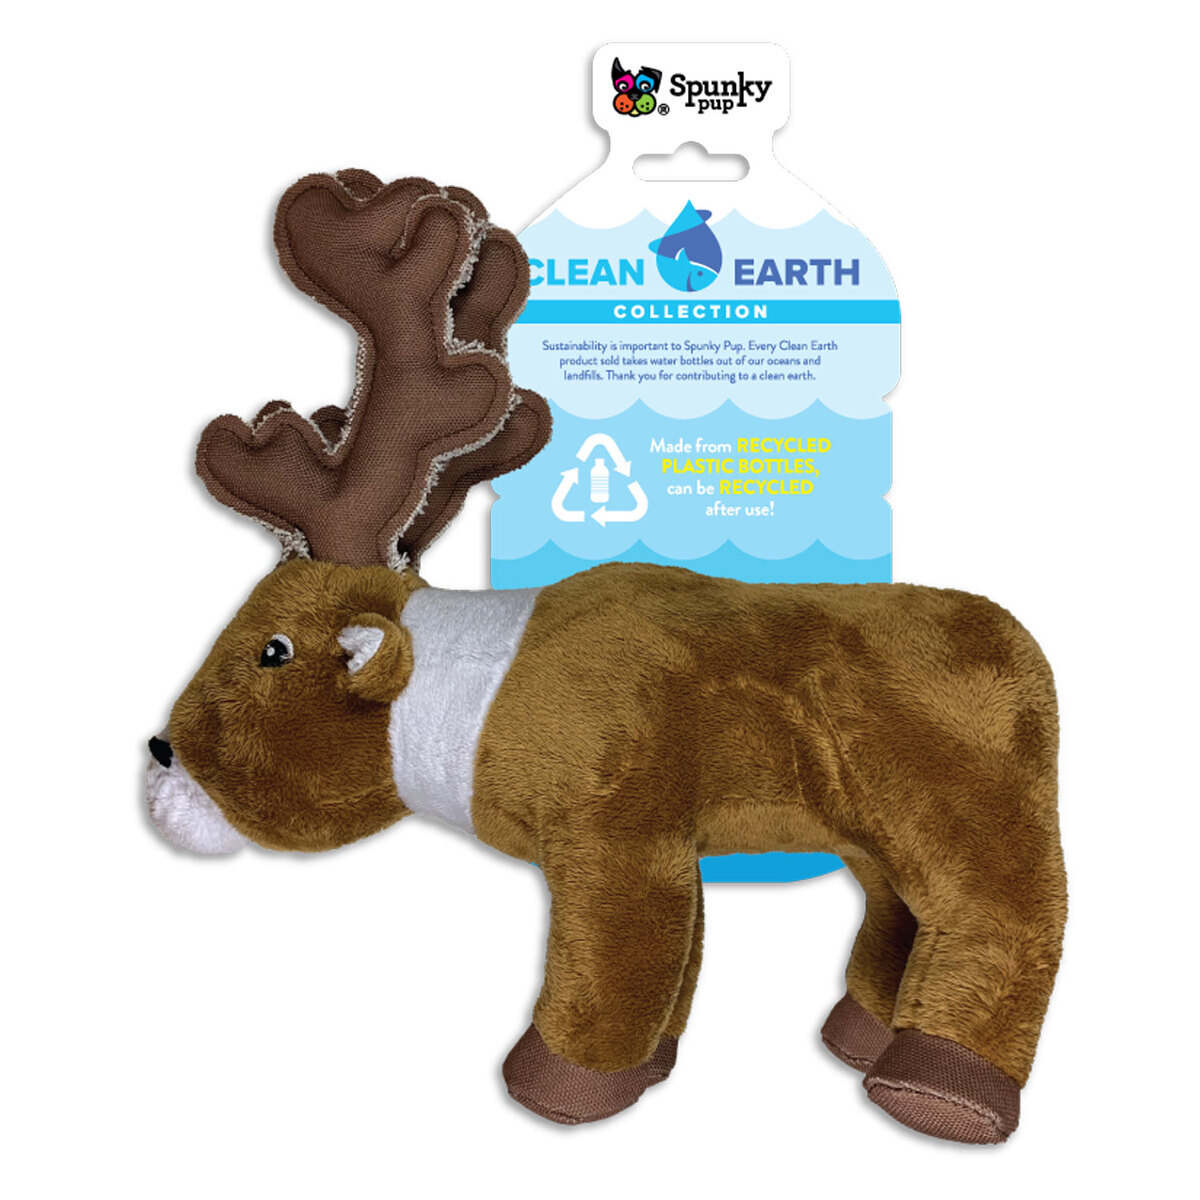 Kong Cozie Marvin The Moose Plush Dog Toy X-Large